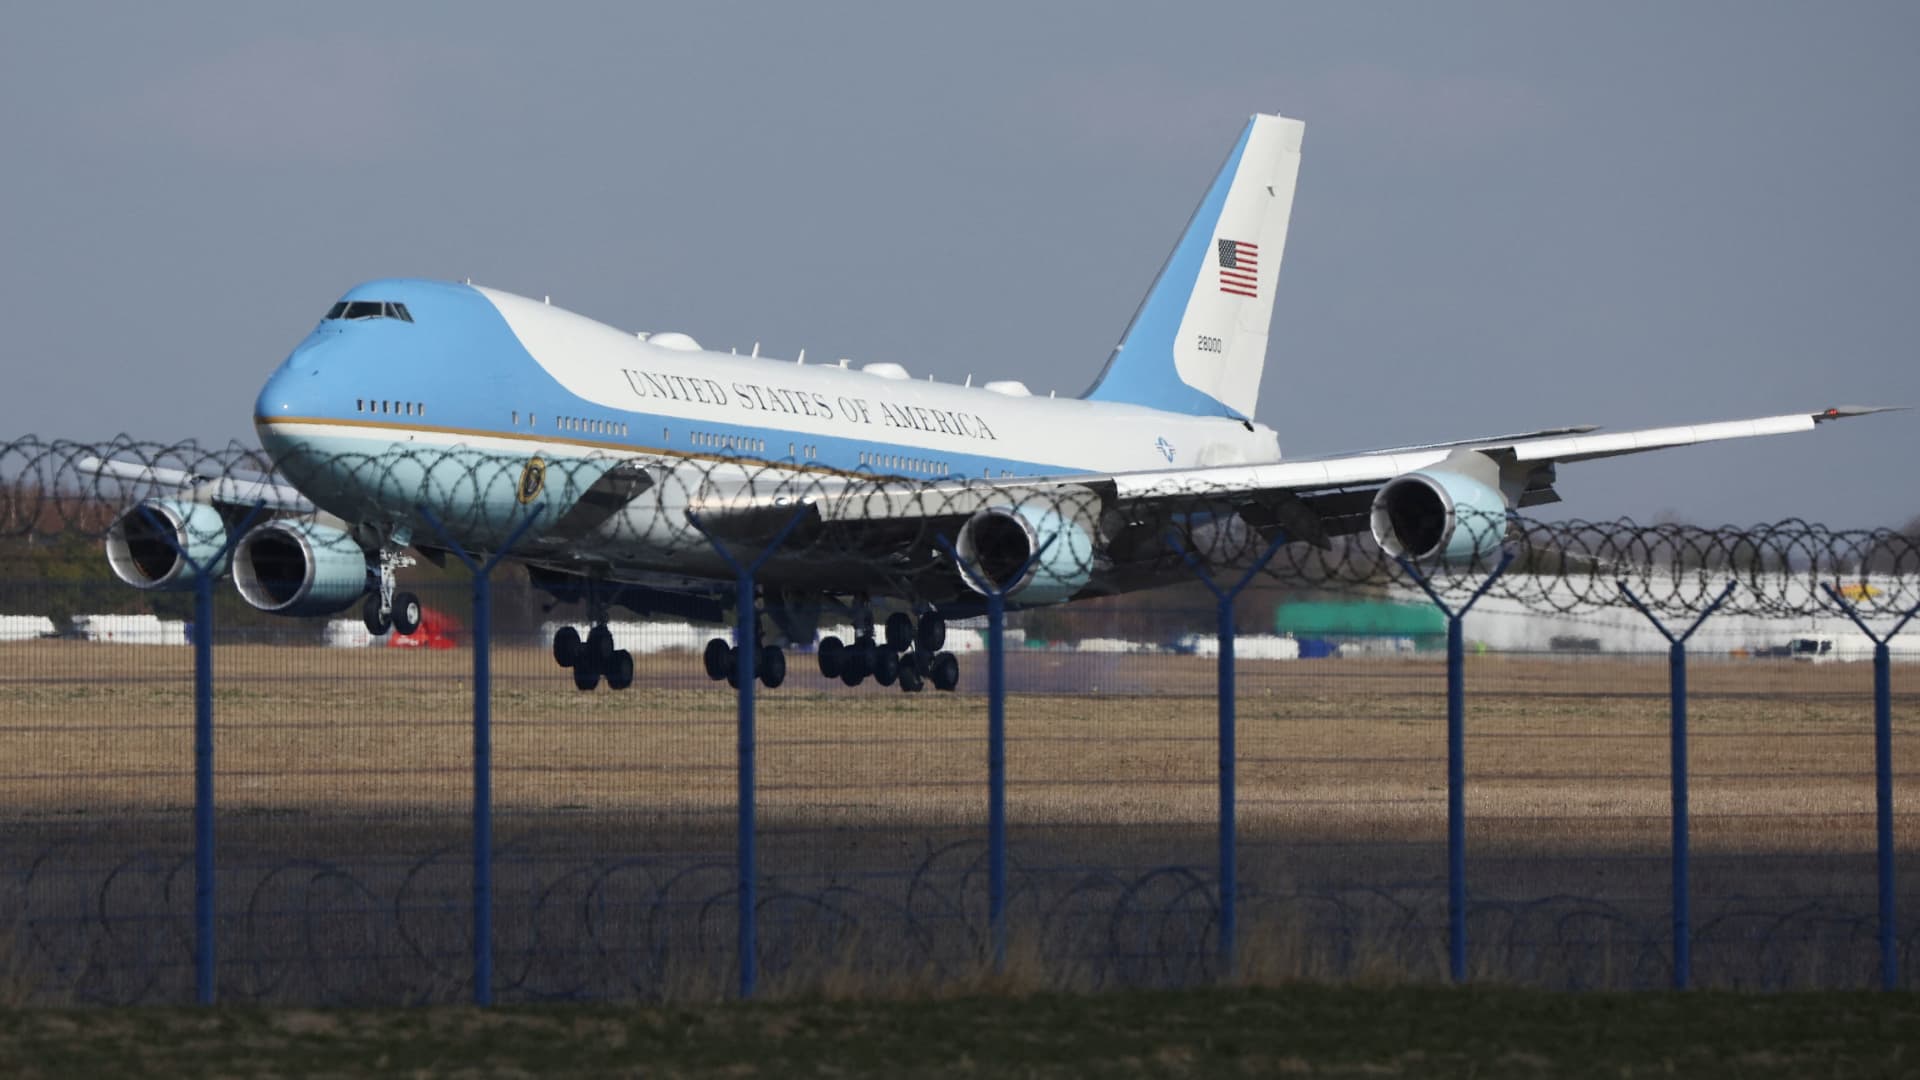 A U.S. support plane lands at Rzeszow-Jasionka Airport ahead of U.S. President Joe Biden arrival to visit Poland, amid Russia's invasion of Ukraine, near Rzeszow, Poland, March 25, 2022.